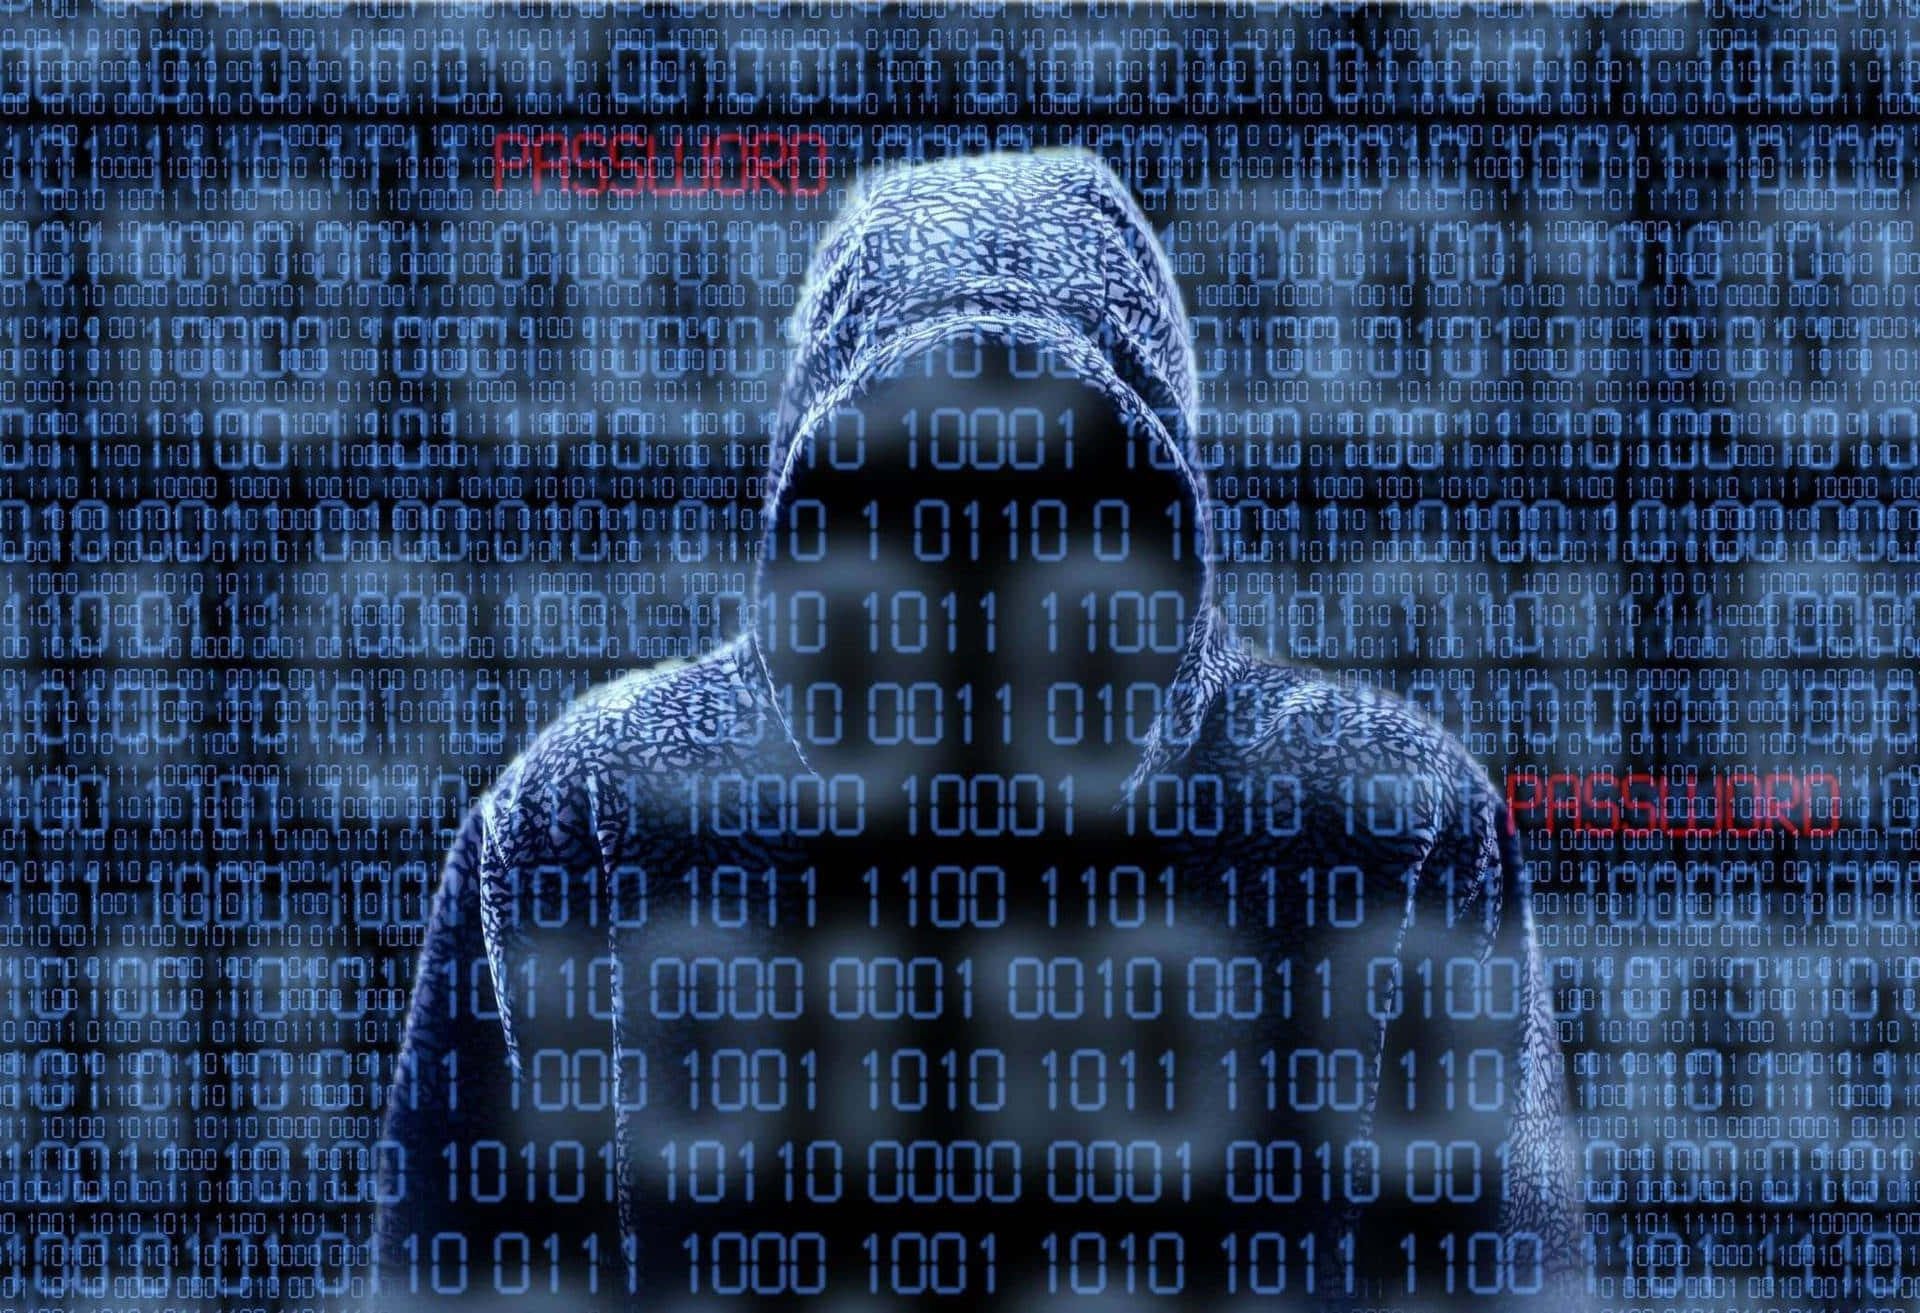 Digital hackers working tirelessly to expose vulnerabilities